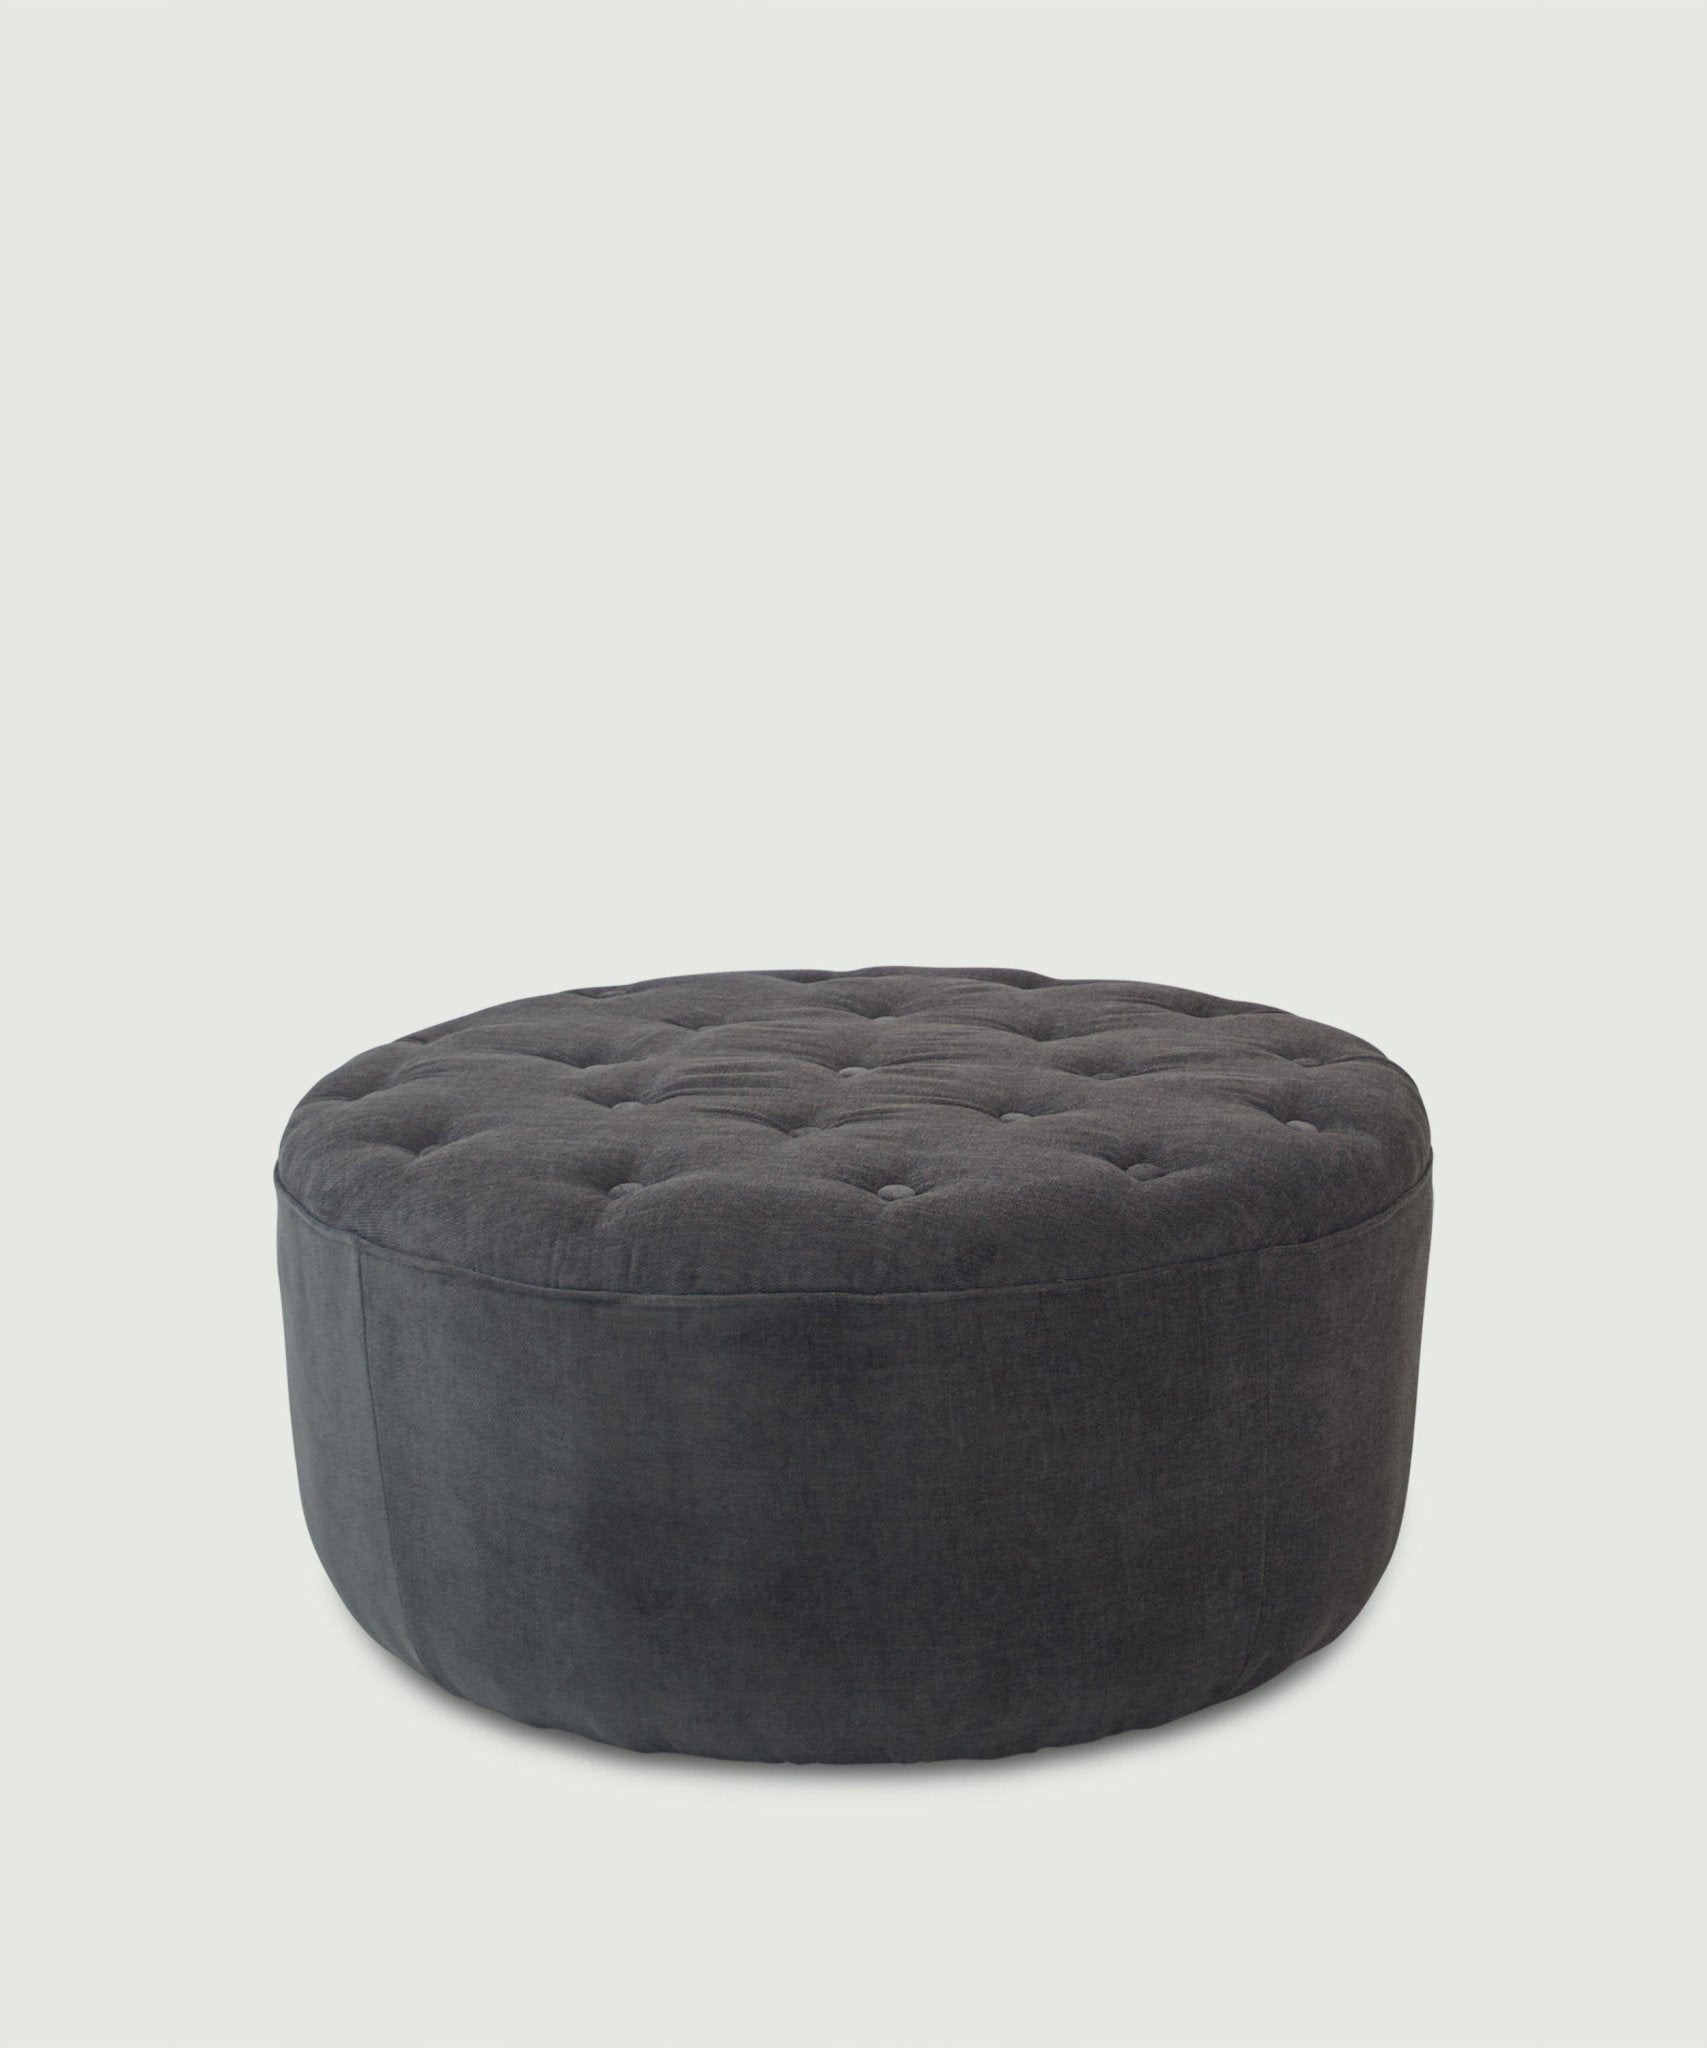 Mørkegrå bouclé puf - Dimple, medium - Njordec - hyggelig indretning til stuen - rund puf - med knapper - blød puf